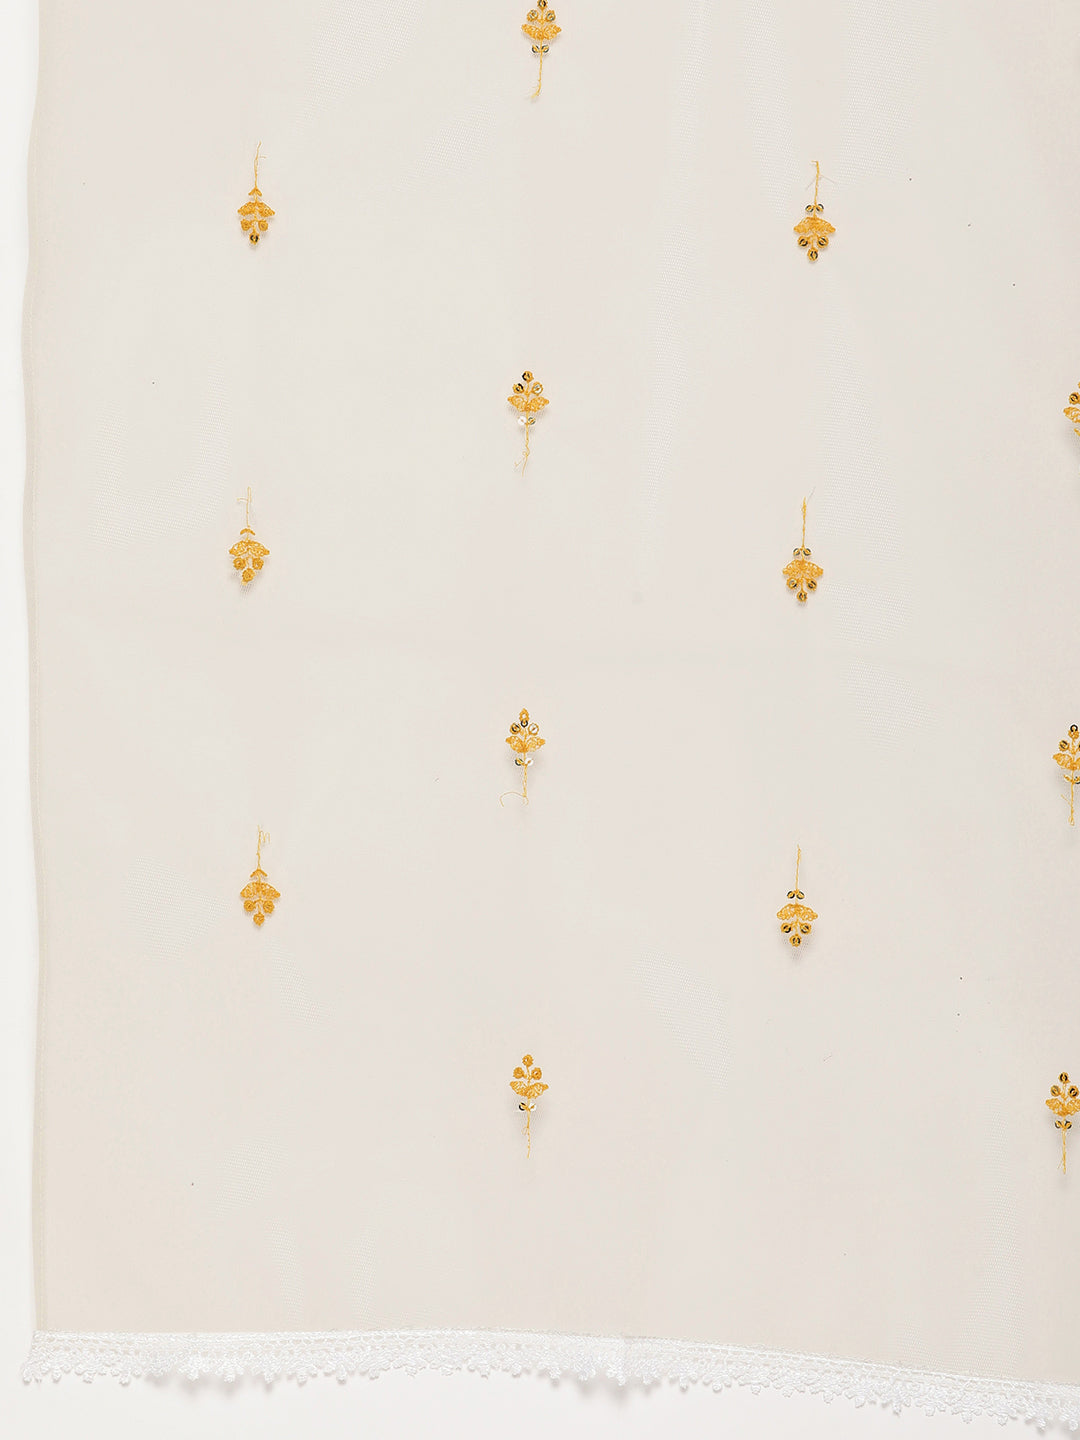 Women's Yellow Embroidered Shoulder Straps Kurta & Sharara With Dupatta - Bhama Couture